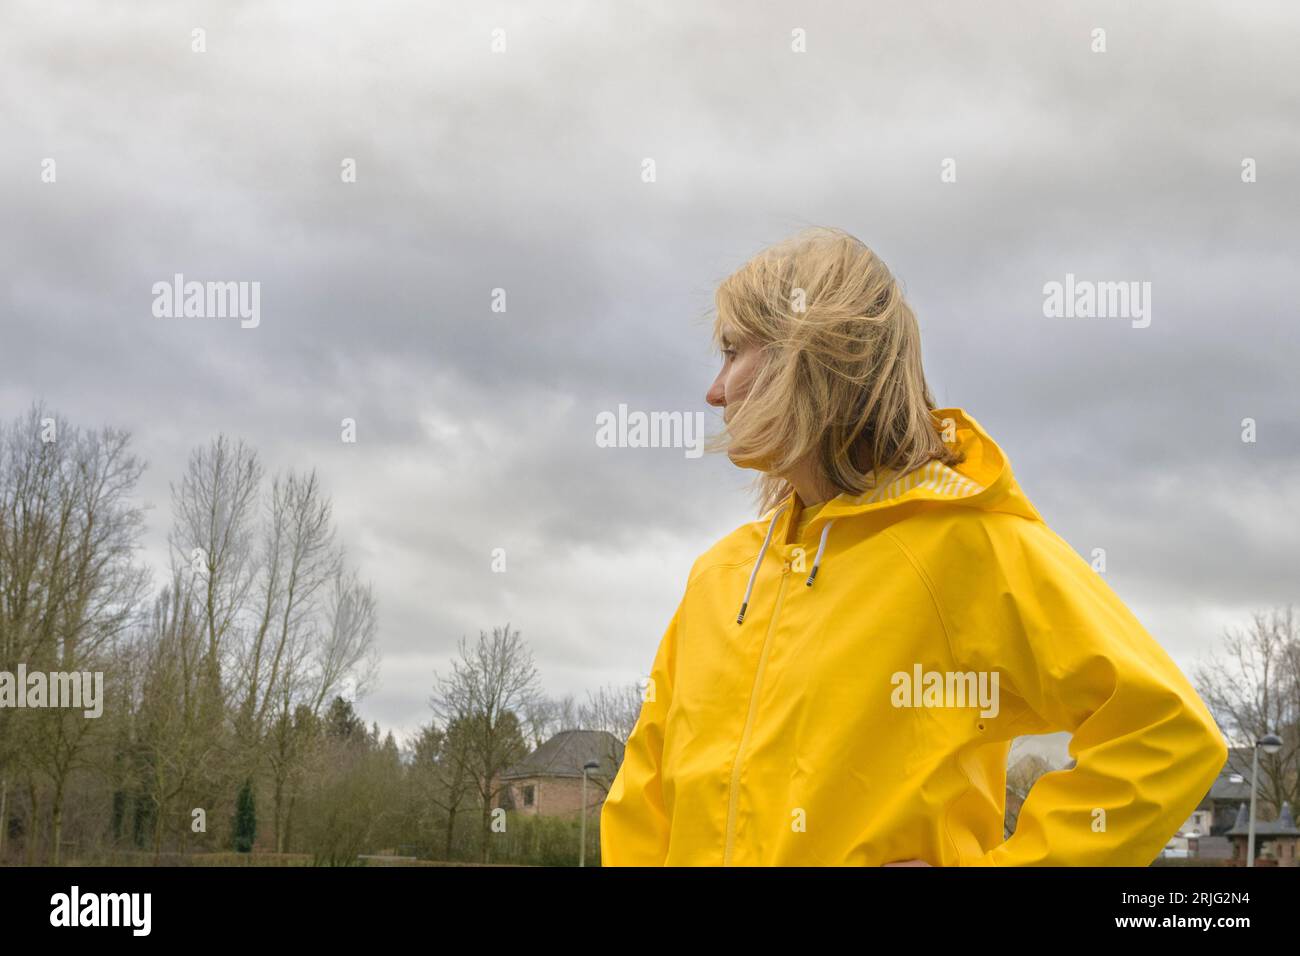 Chubasqueros para mujeres señora lluvia poncho trajes lluvia desgaste largo  lluvia chaqueta